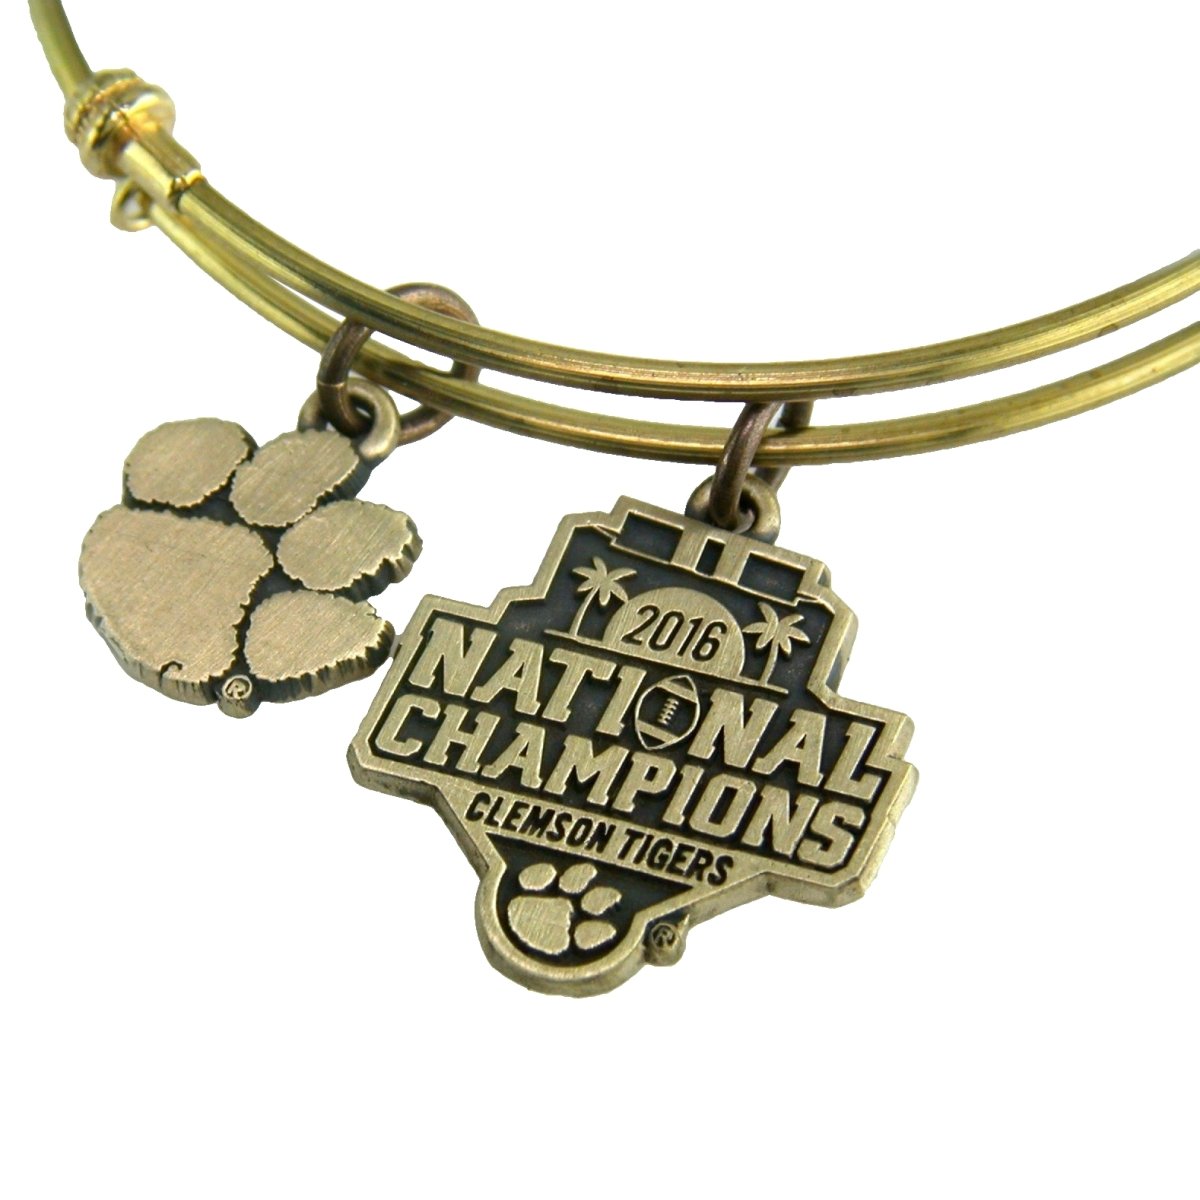 Argent Sport Clemson Tigers 2016 National Champions Gold Tone Bangle Charm Bracelet - Mr. Knickerbocker